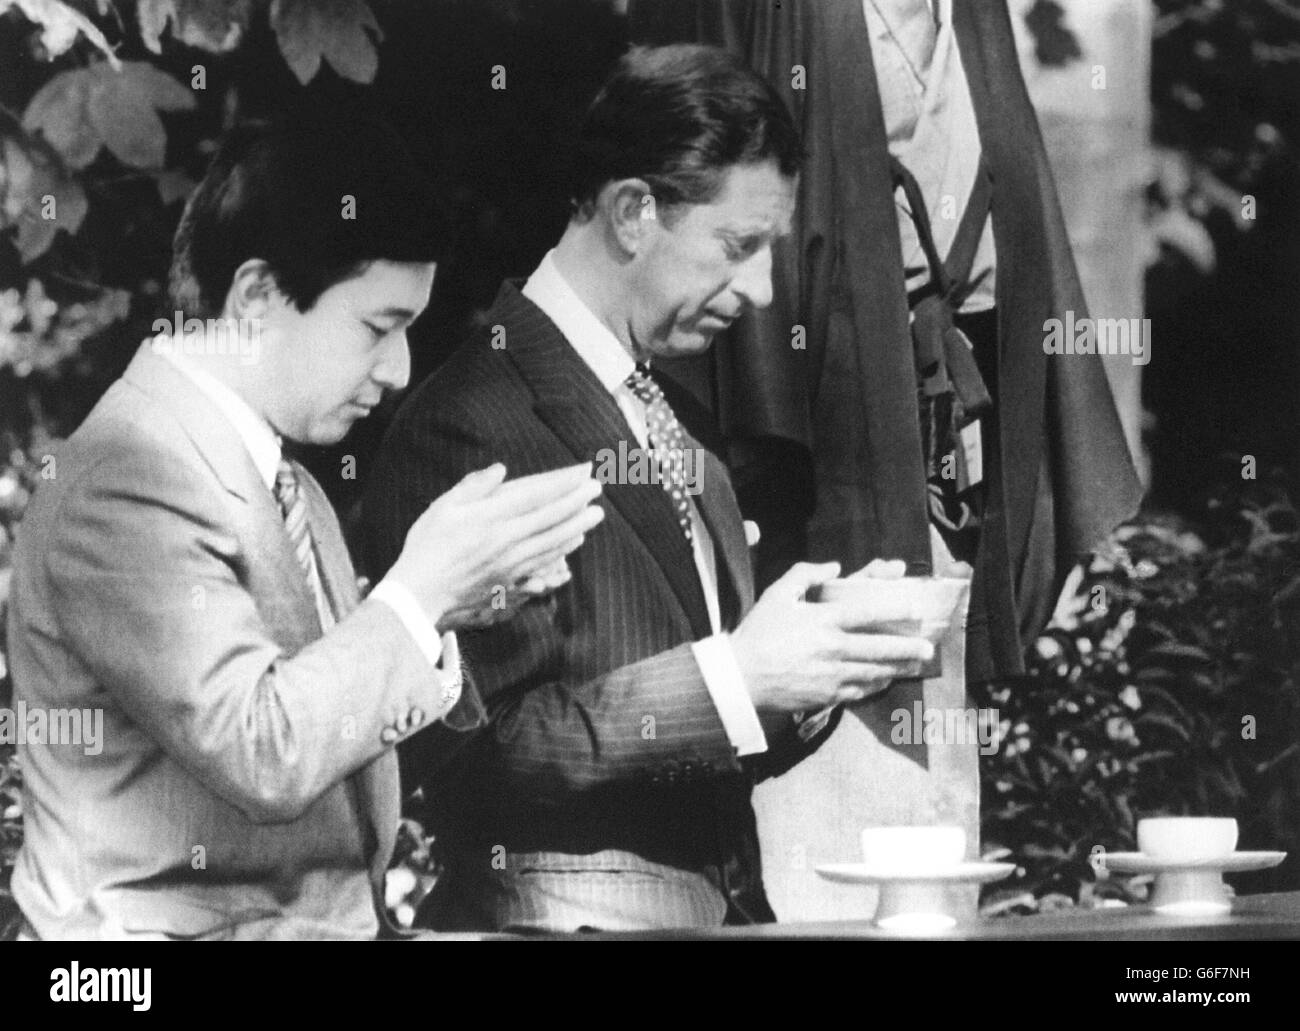 News - Japanese Tea Ceremony - Prince Neruhito and Prince Charles - London Stock Photo